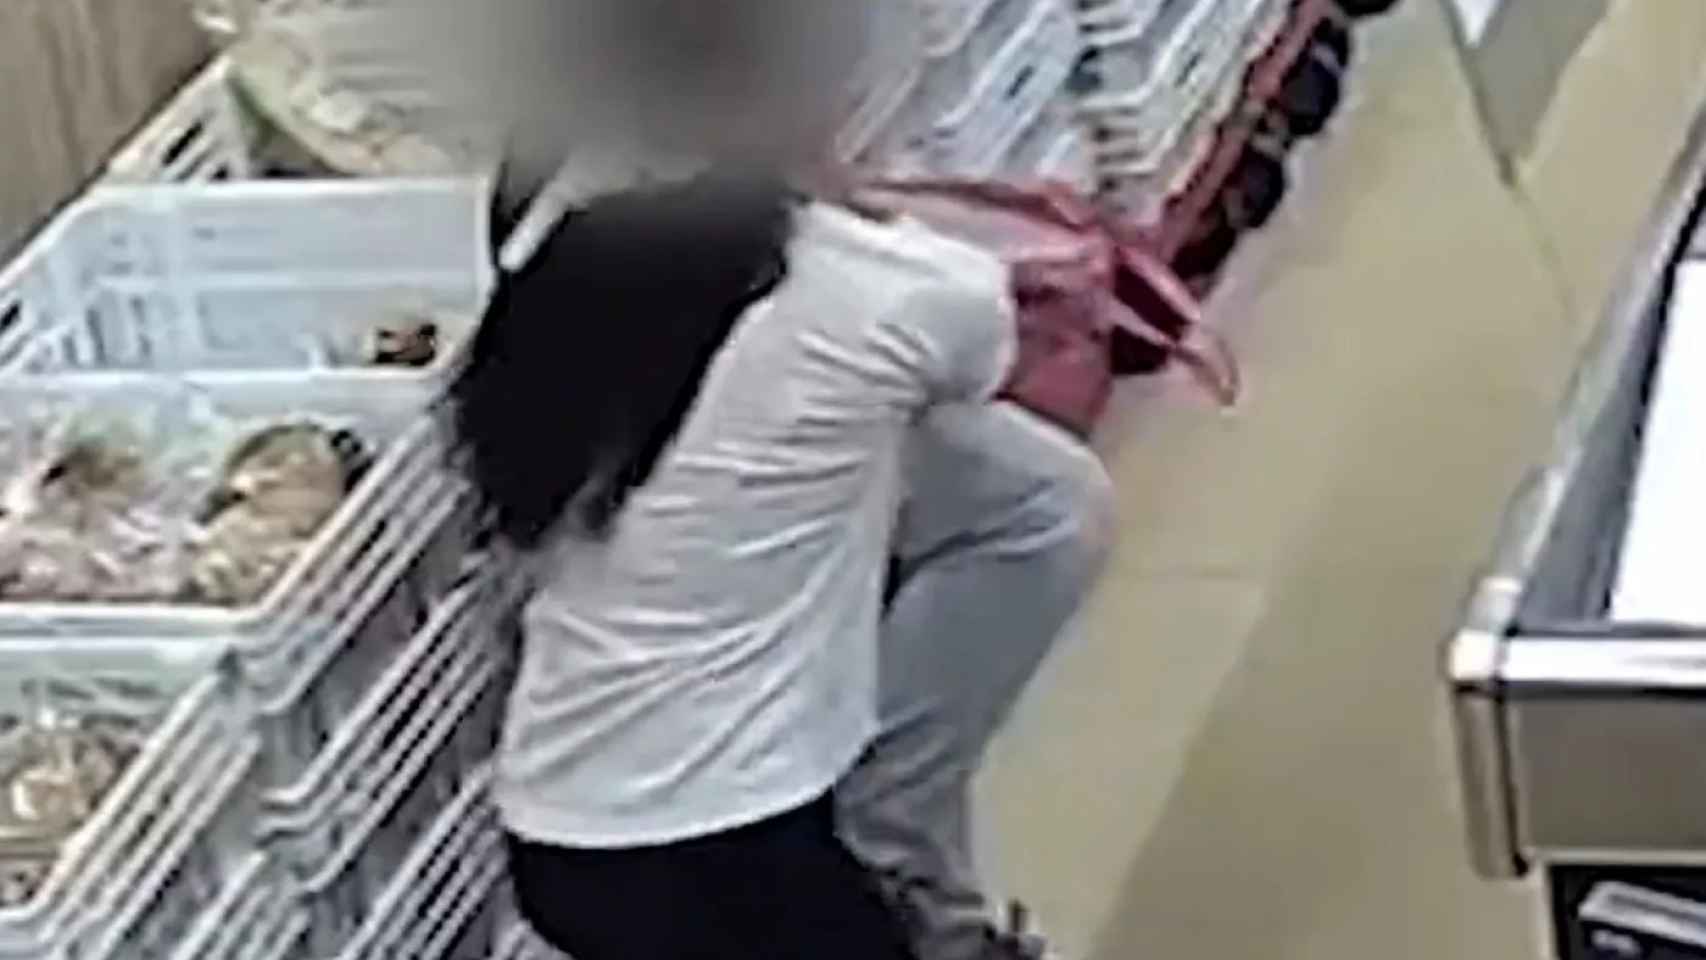 Captura de pantalla del vídeo de la agresión a una trabajadora de Martorell / MOSSOS D'ESQUADRA